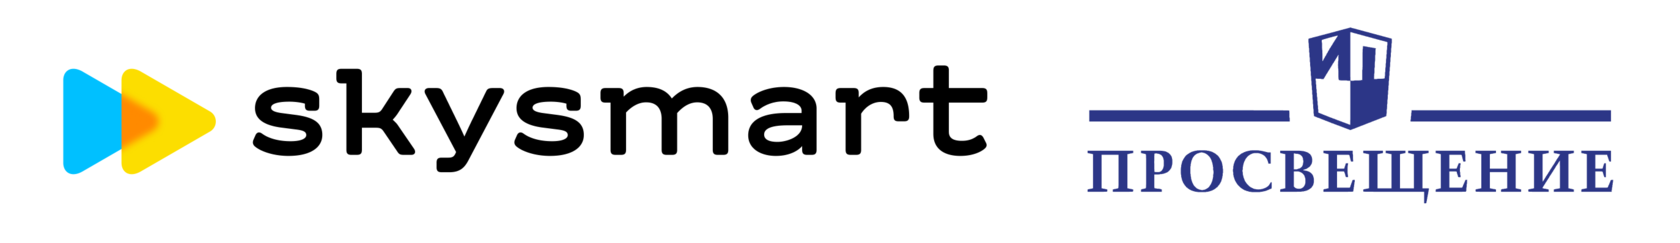 SKYSMART. SKYSMART лого. Интерактивная тетрадь Sky Smart. Интерактивная рабочая тетрадь SKYSMART.